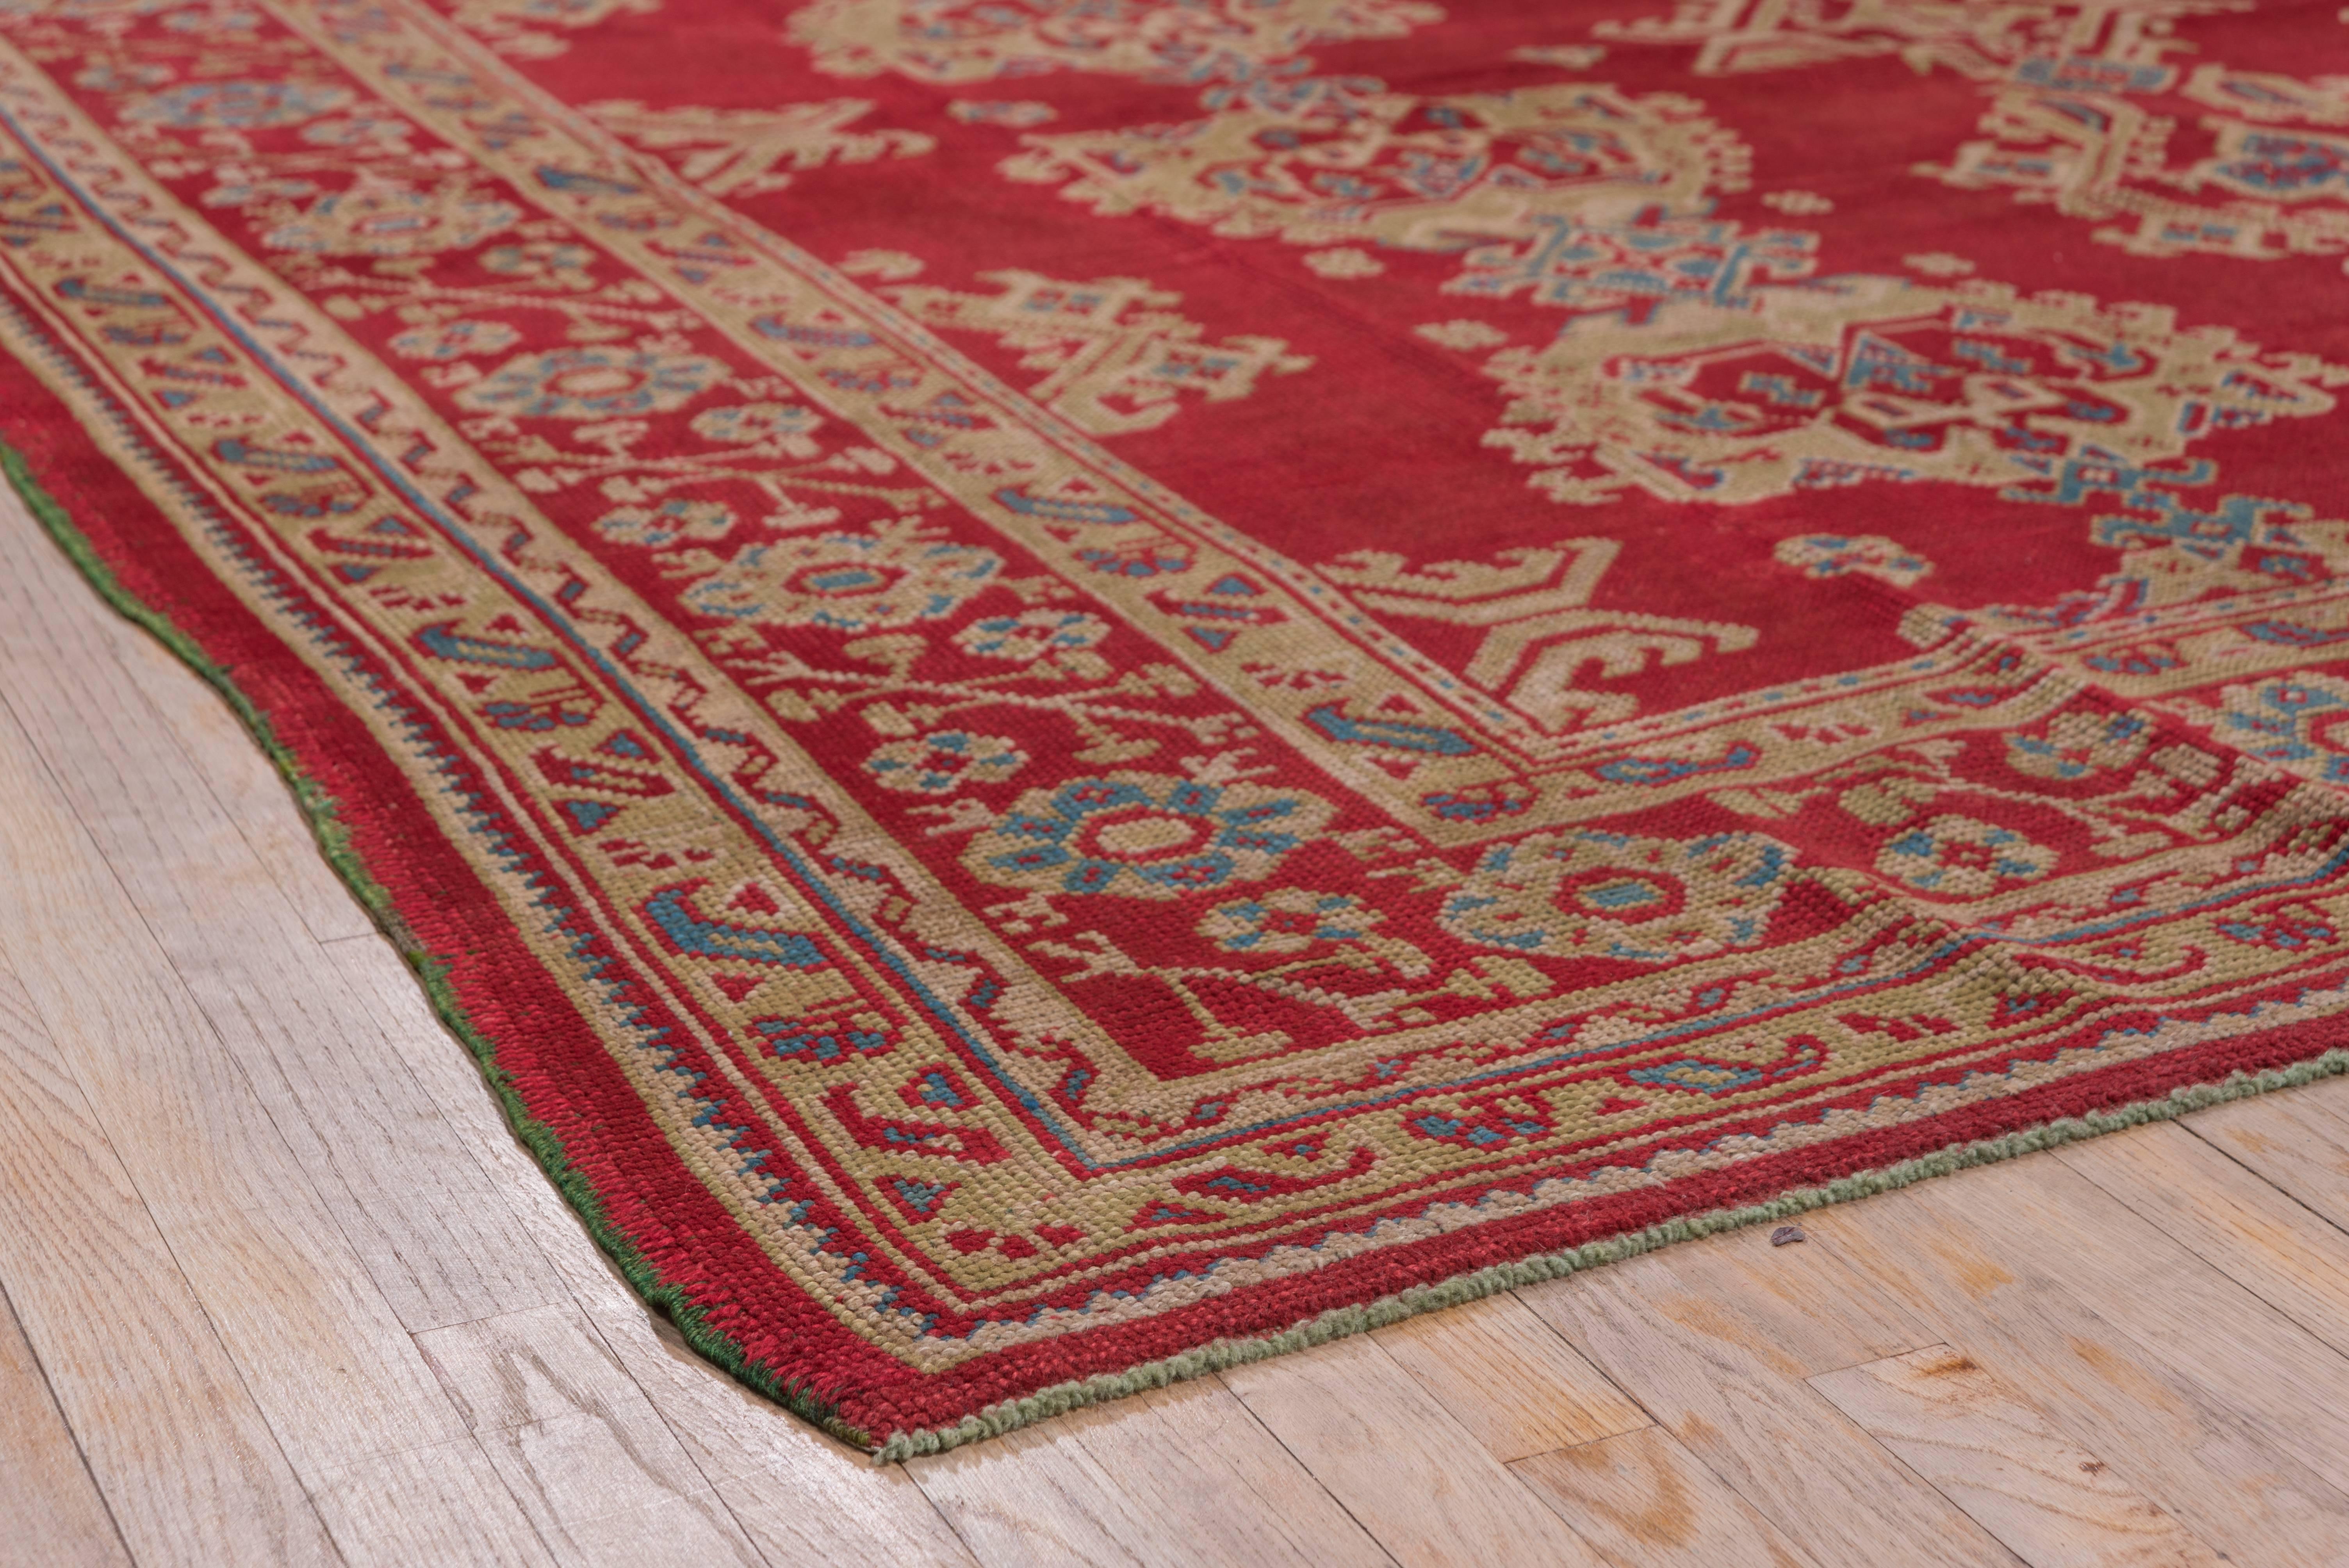 20th Century Red Classic Antique Oushak Carpet, Circa 1920s For Sale